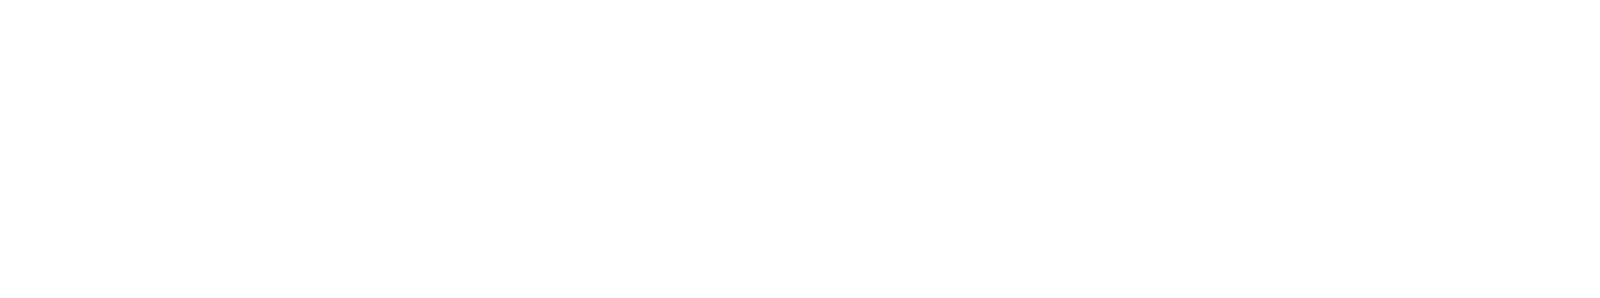 Bank of Communications logo large for dark backgrounds (transparent PNG)